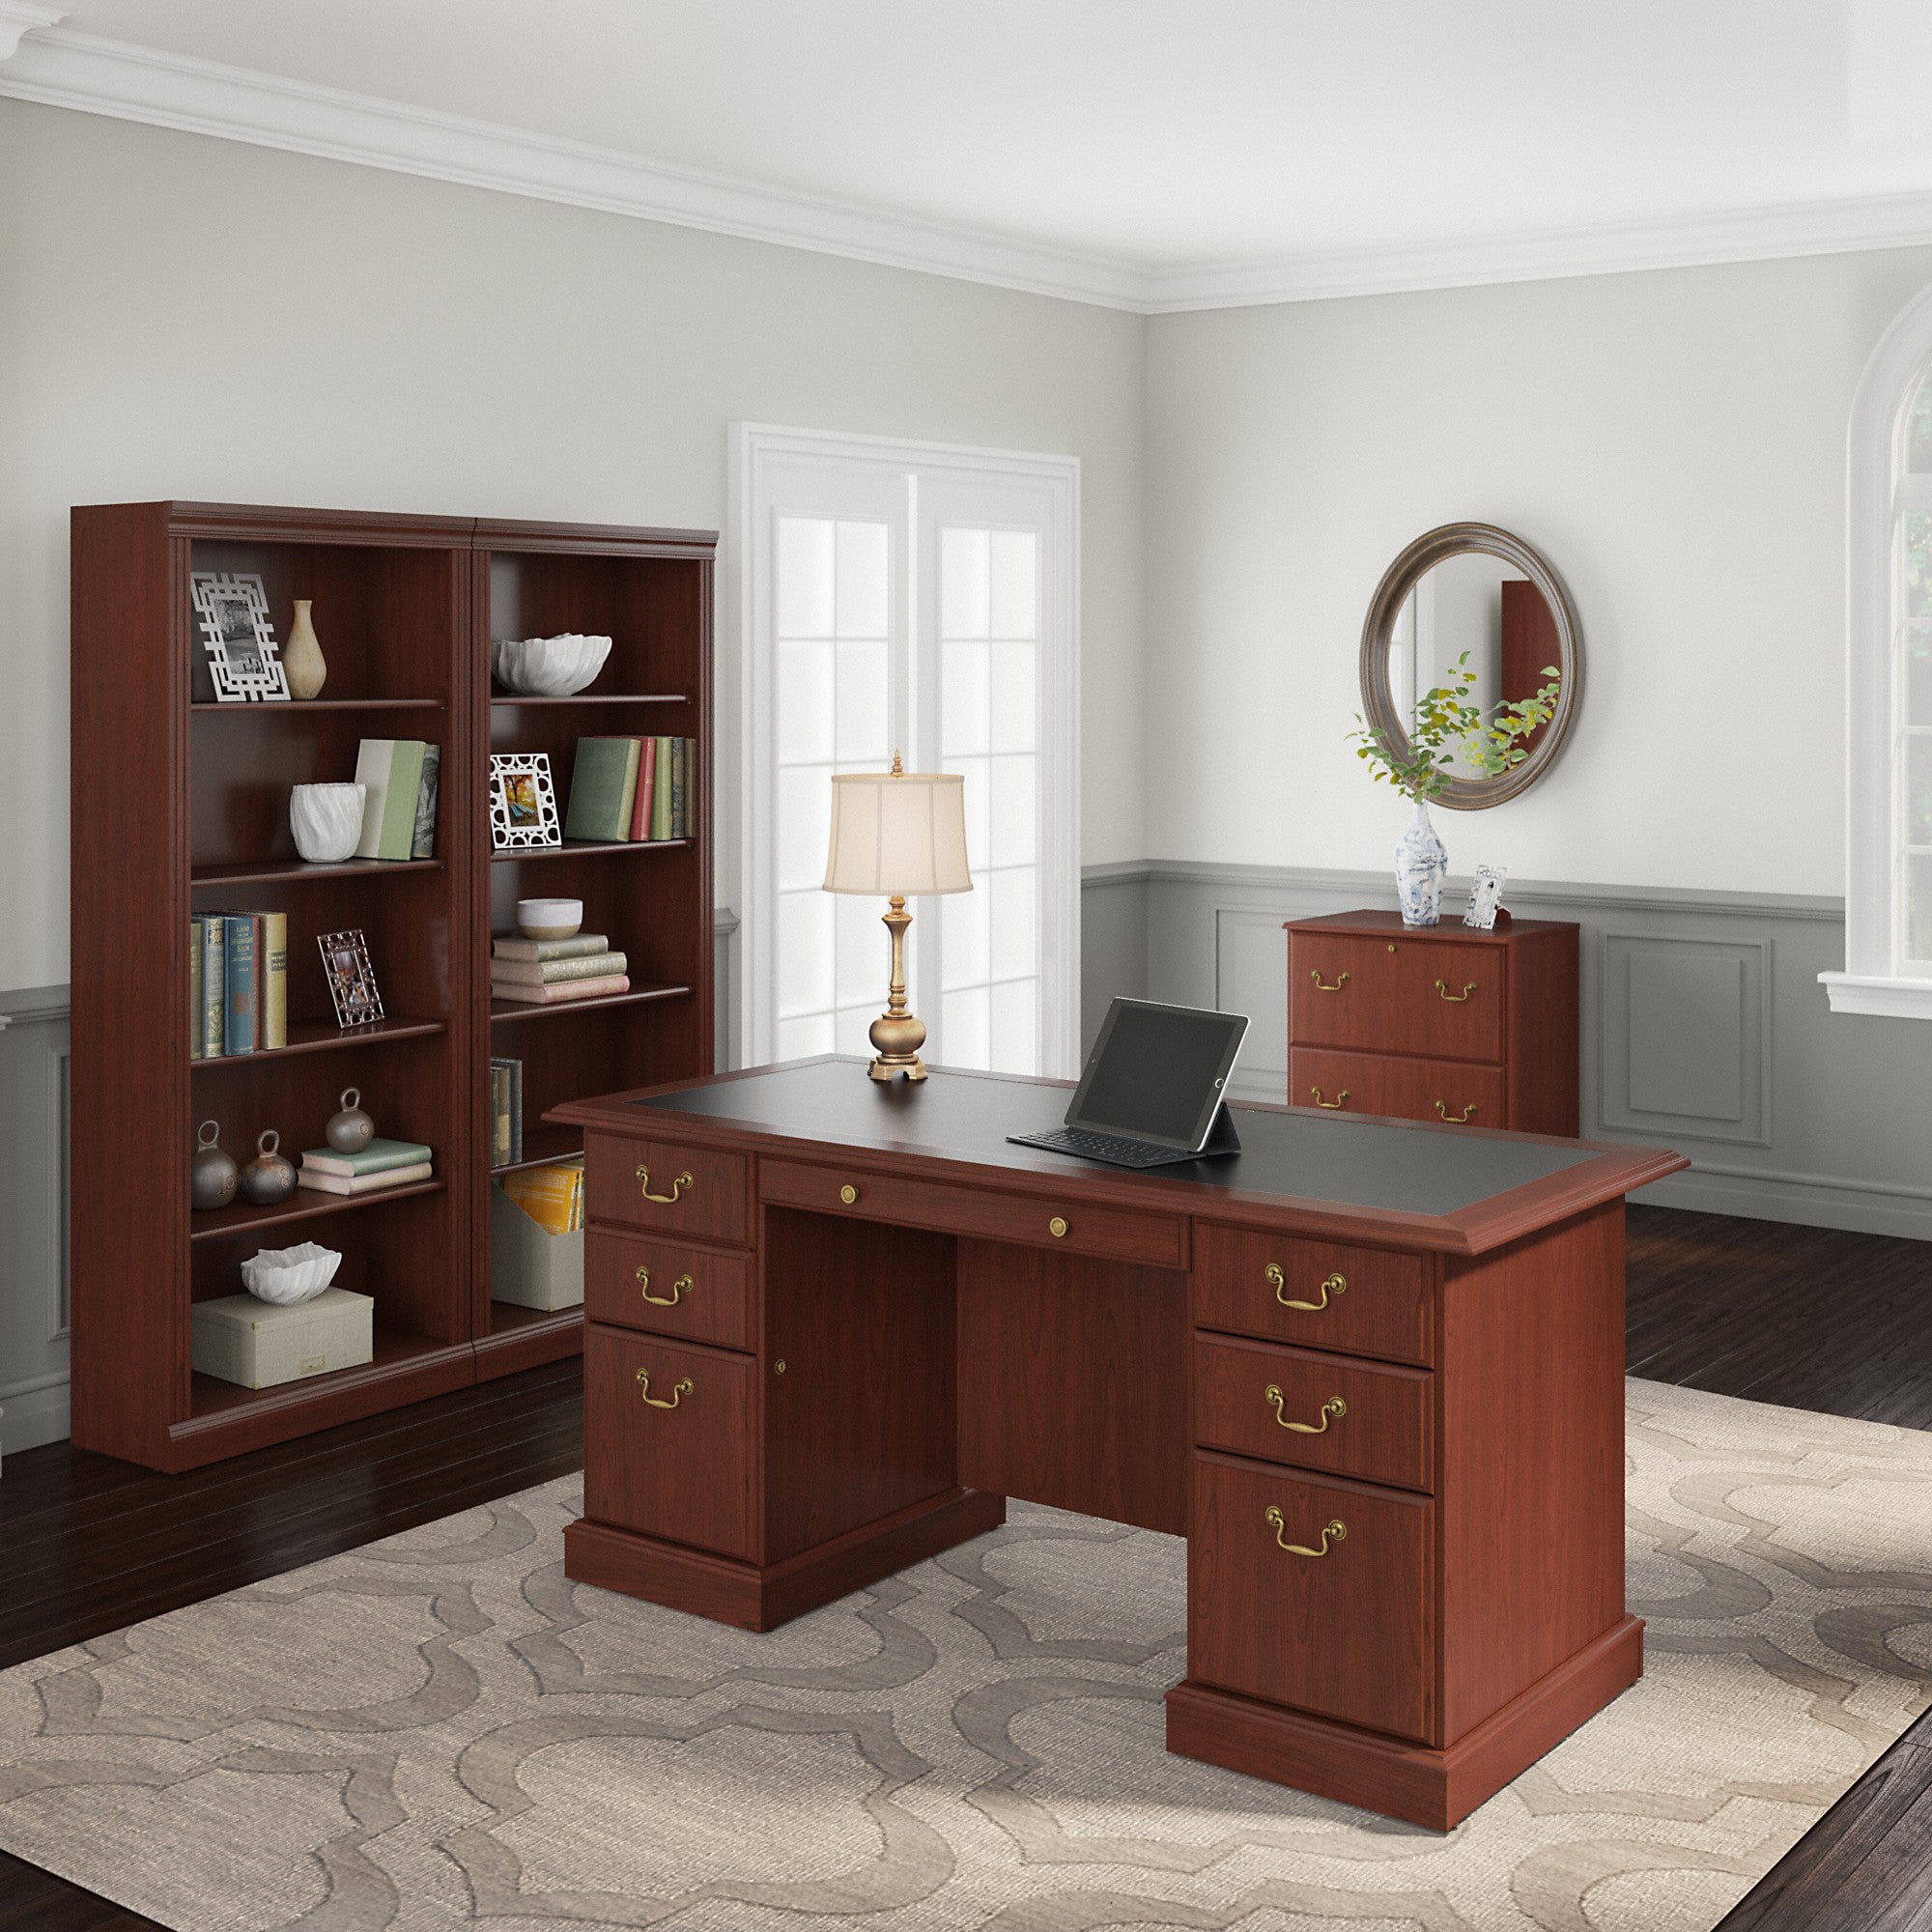 Bush Furniture Saratoga Executive Desk with Drawers